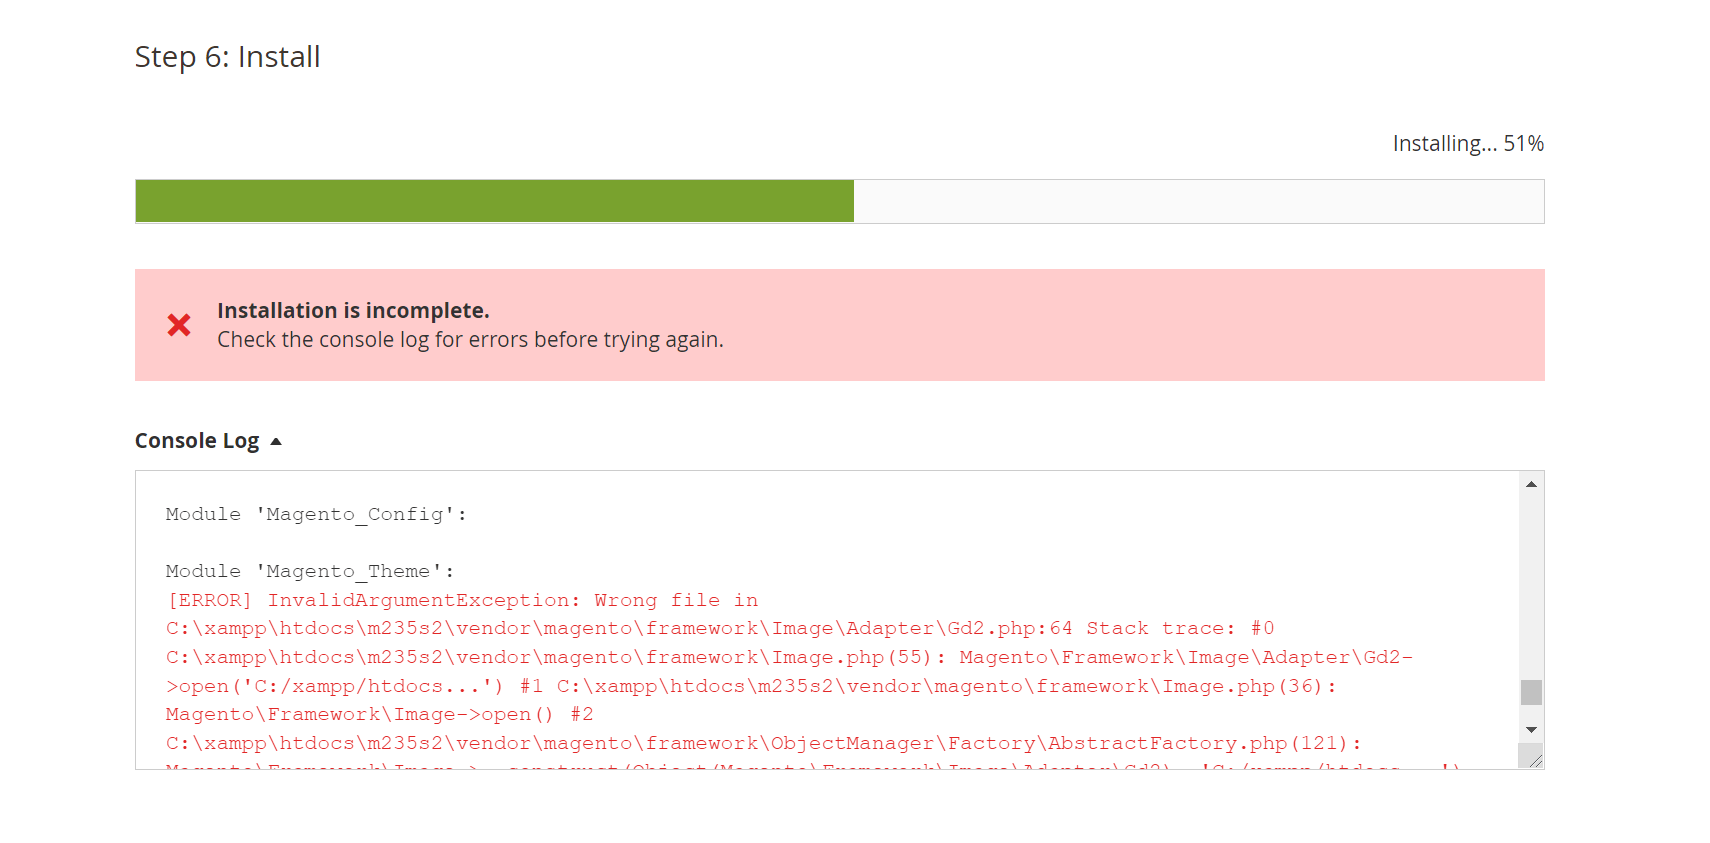 Magento_Theme error while installation